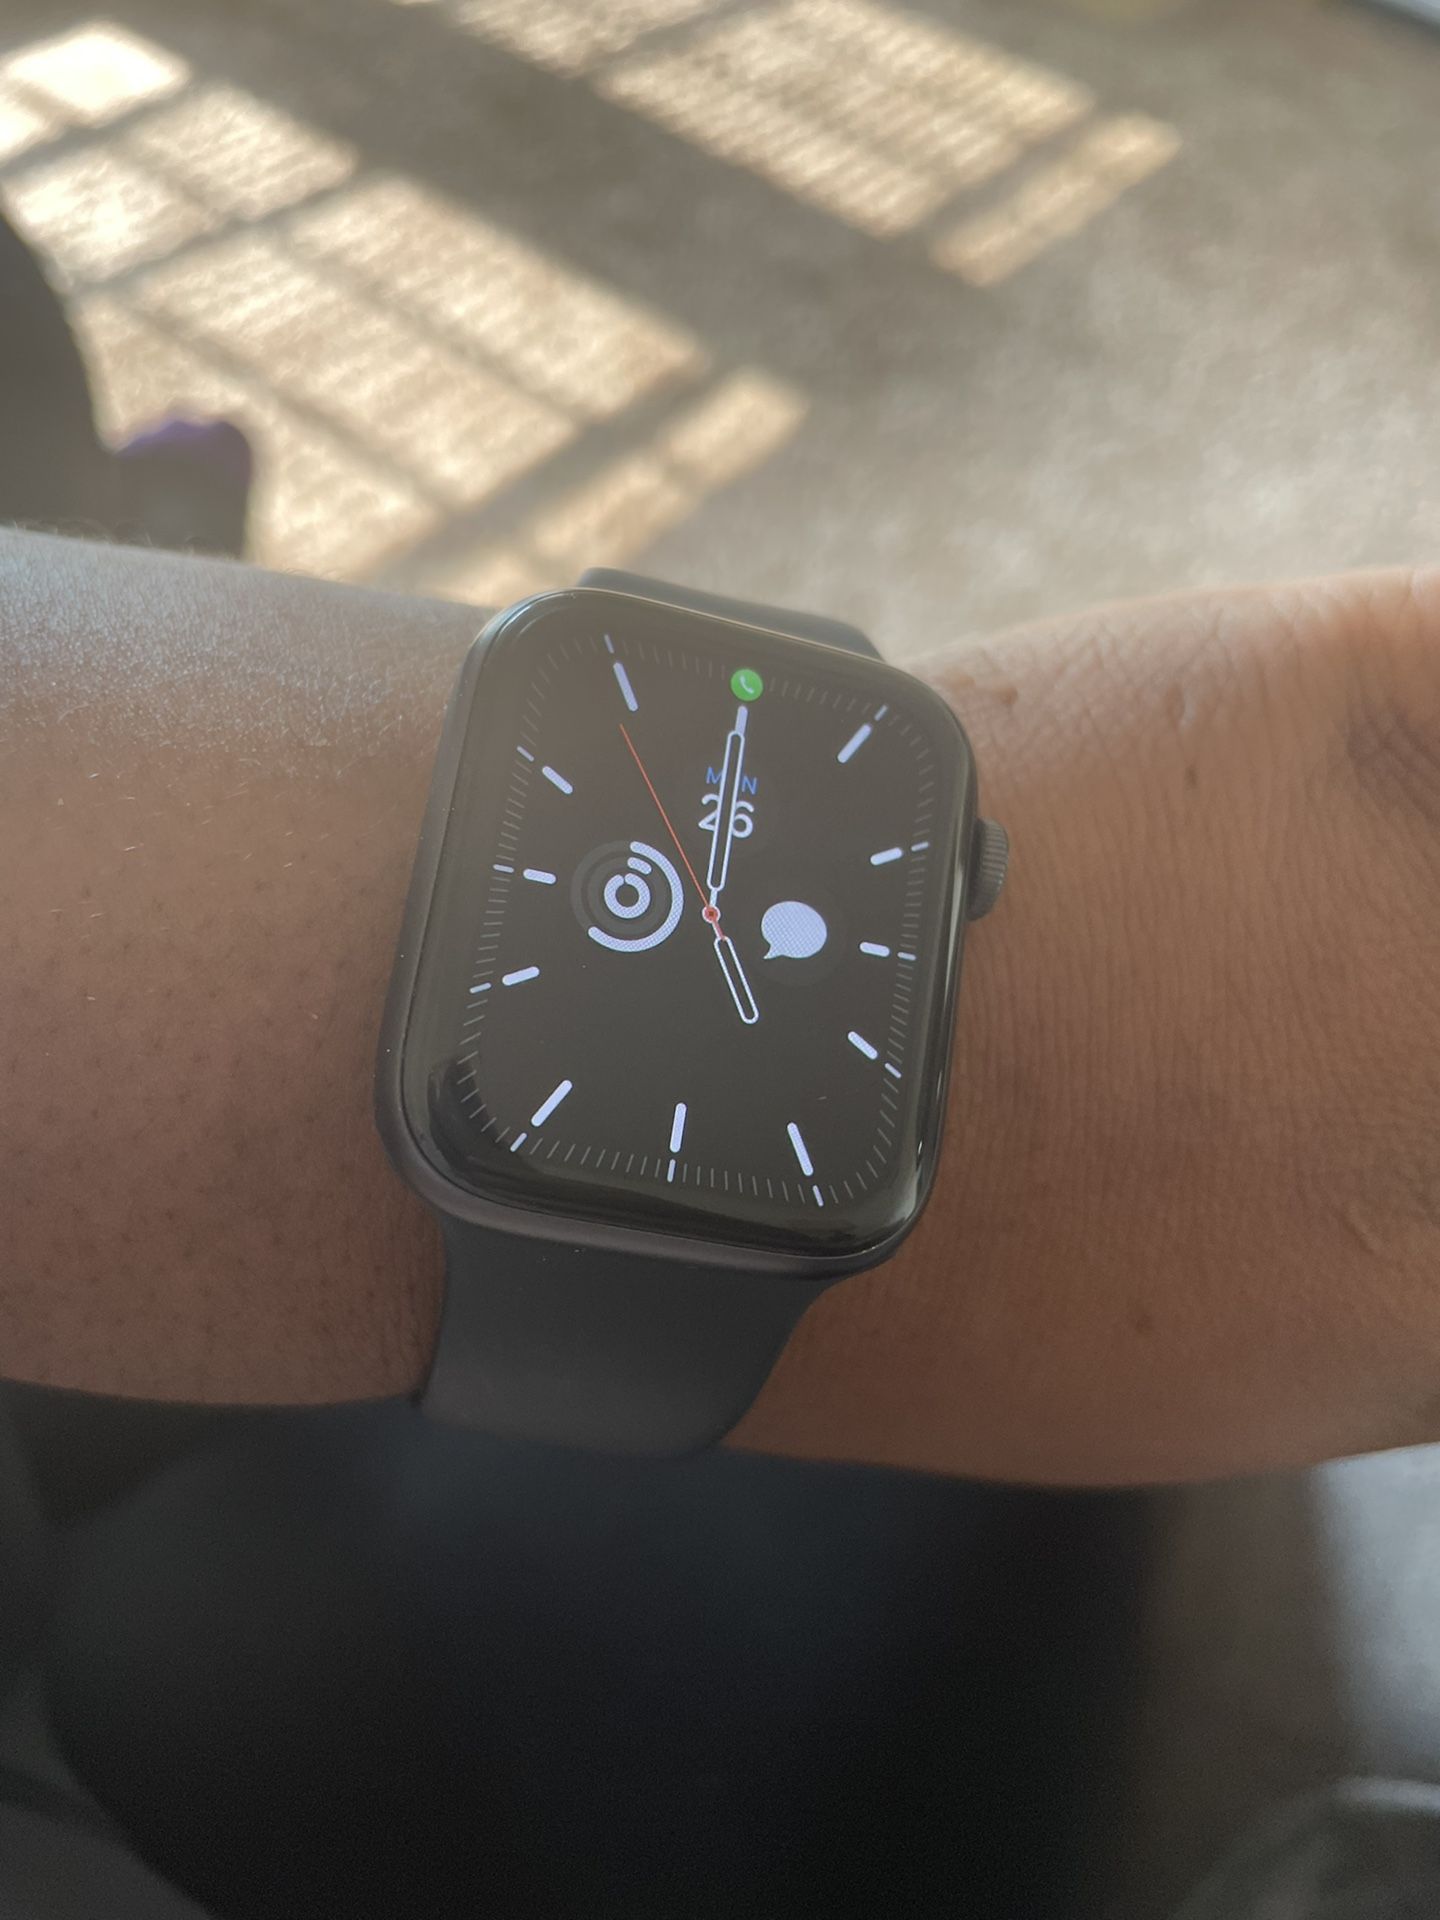 Series 6 Apple Watch 